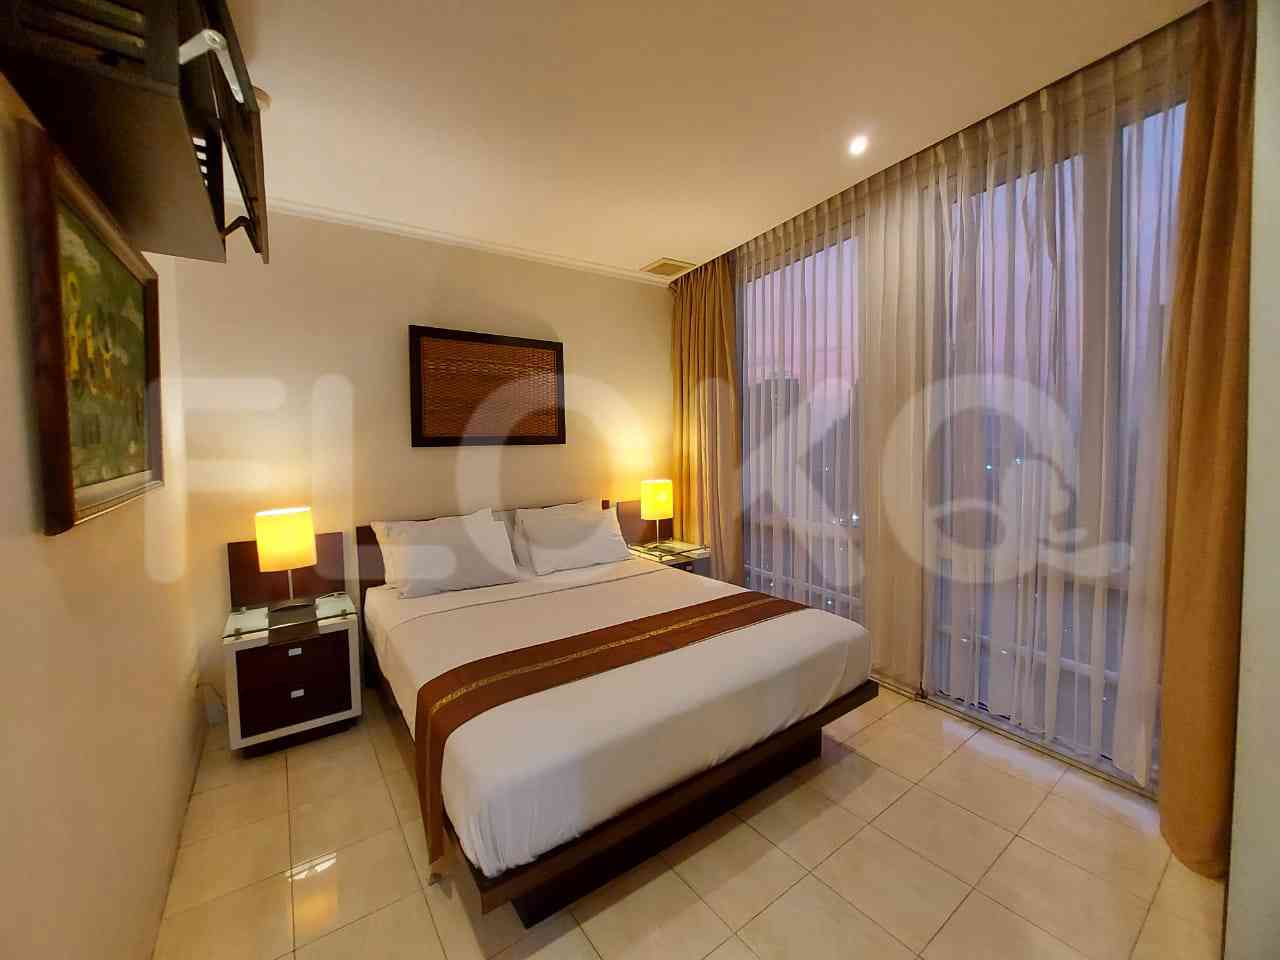 2 Bedroom on 24th Floor for Rent in FX Residence - fsu69d 3